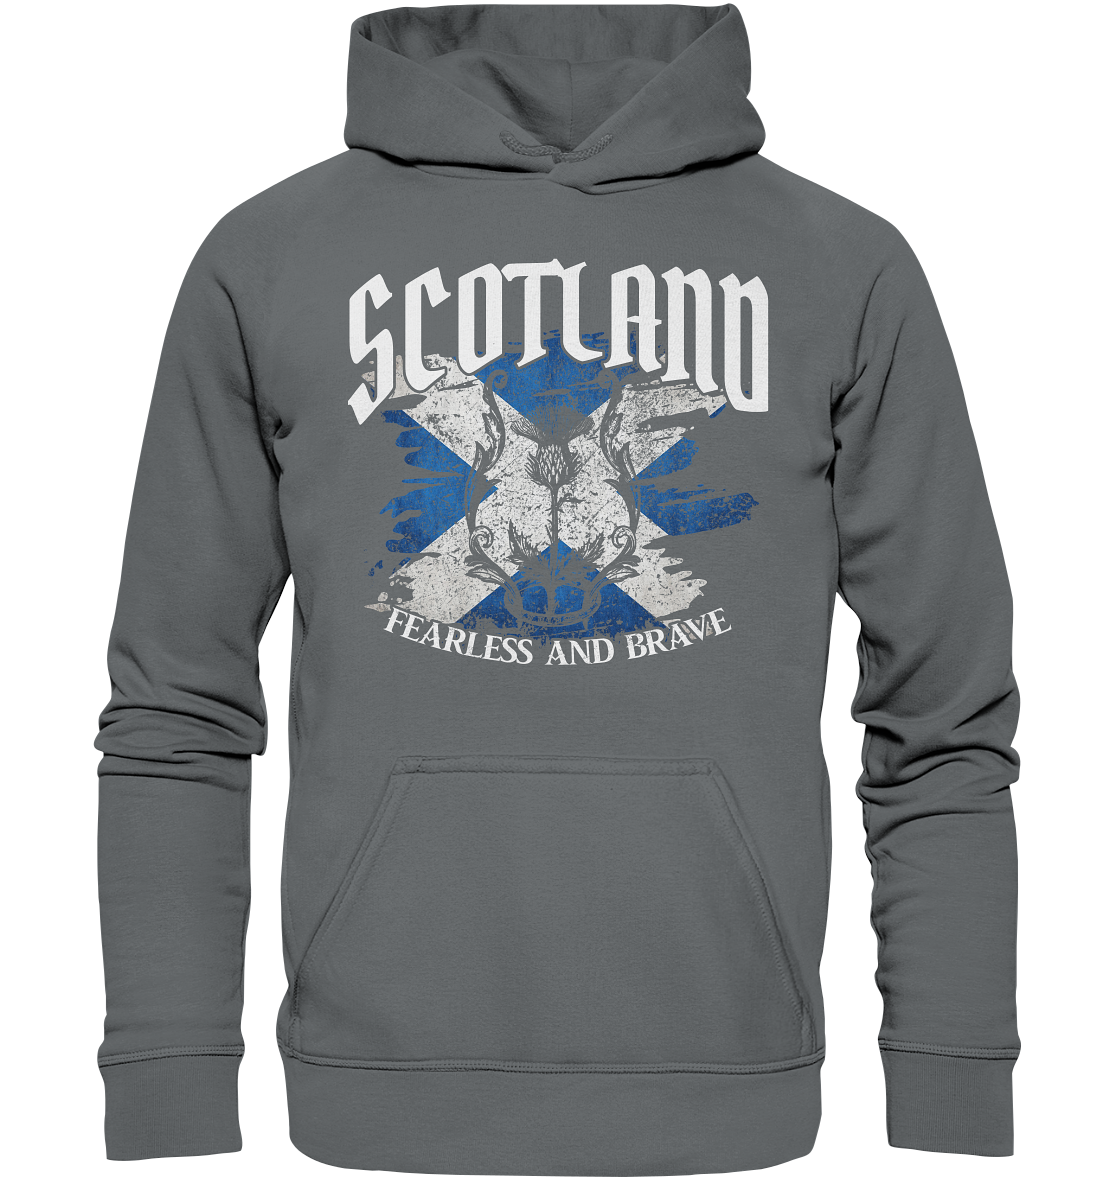 Scotland "Fearless and Brave / Splatter" - Basic Unisex Hoodie